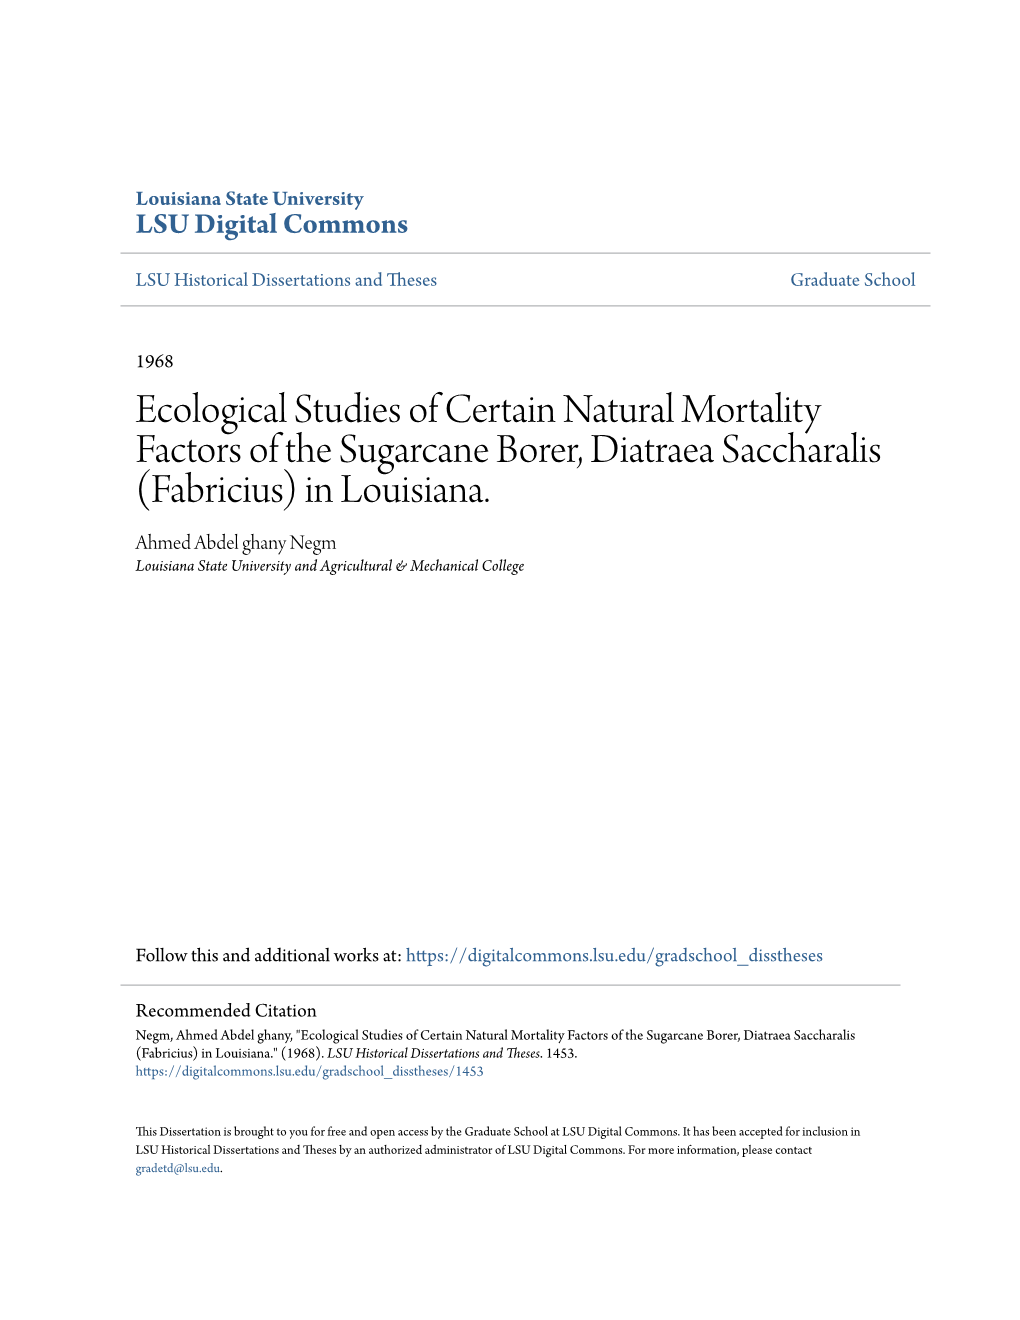 Ecological Studies of Certain Natural Mortality Factors of the Sugarcane Borer, Diatraea Saccharalis (Fabricius) in Louisiana